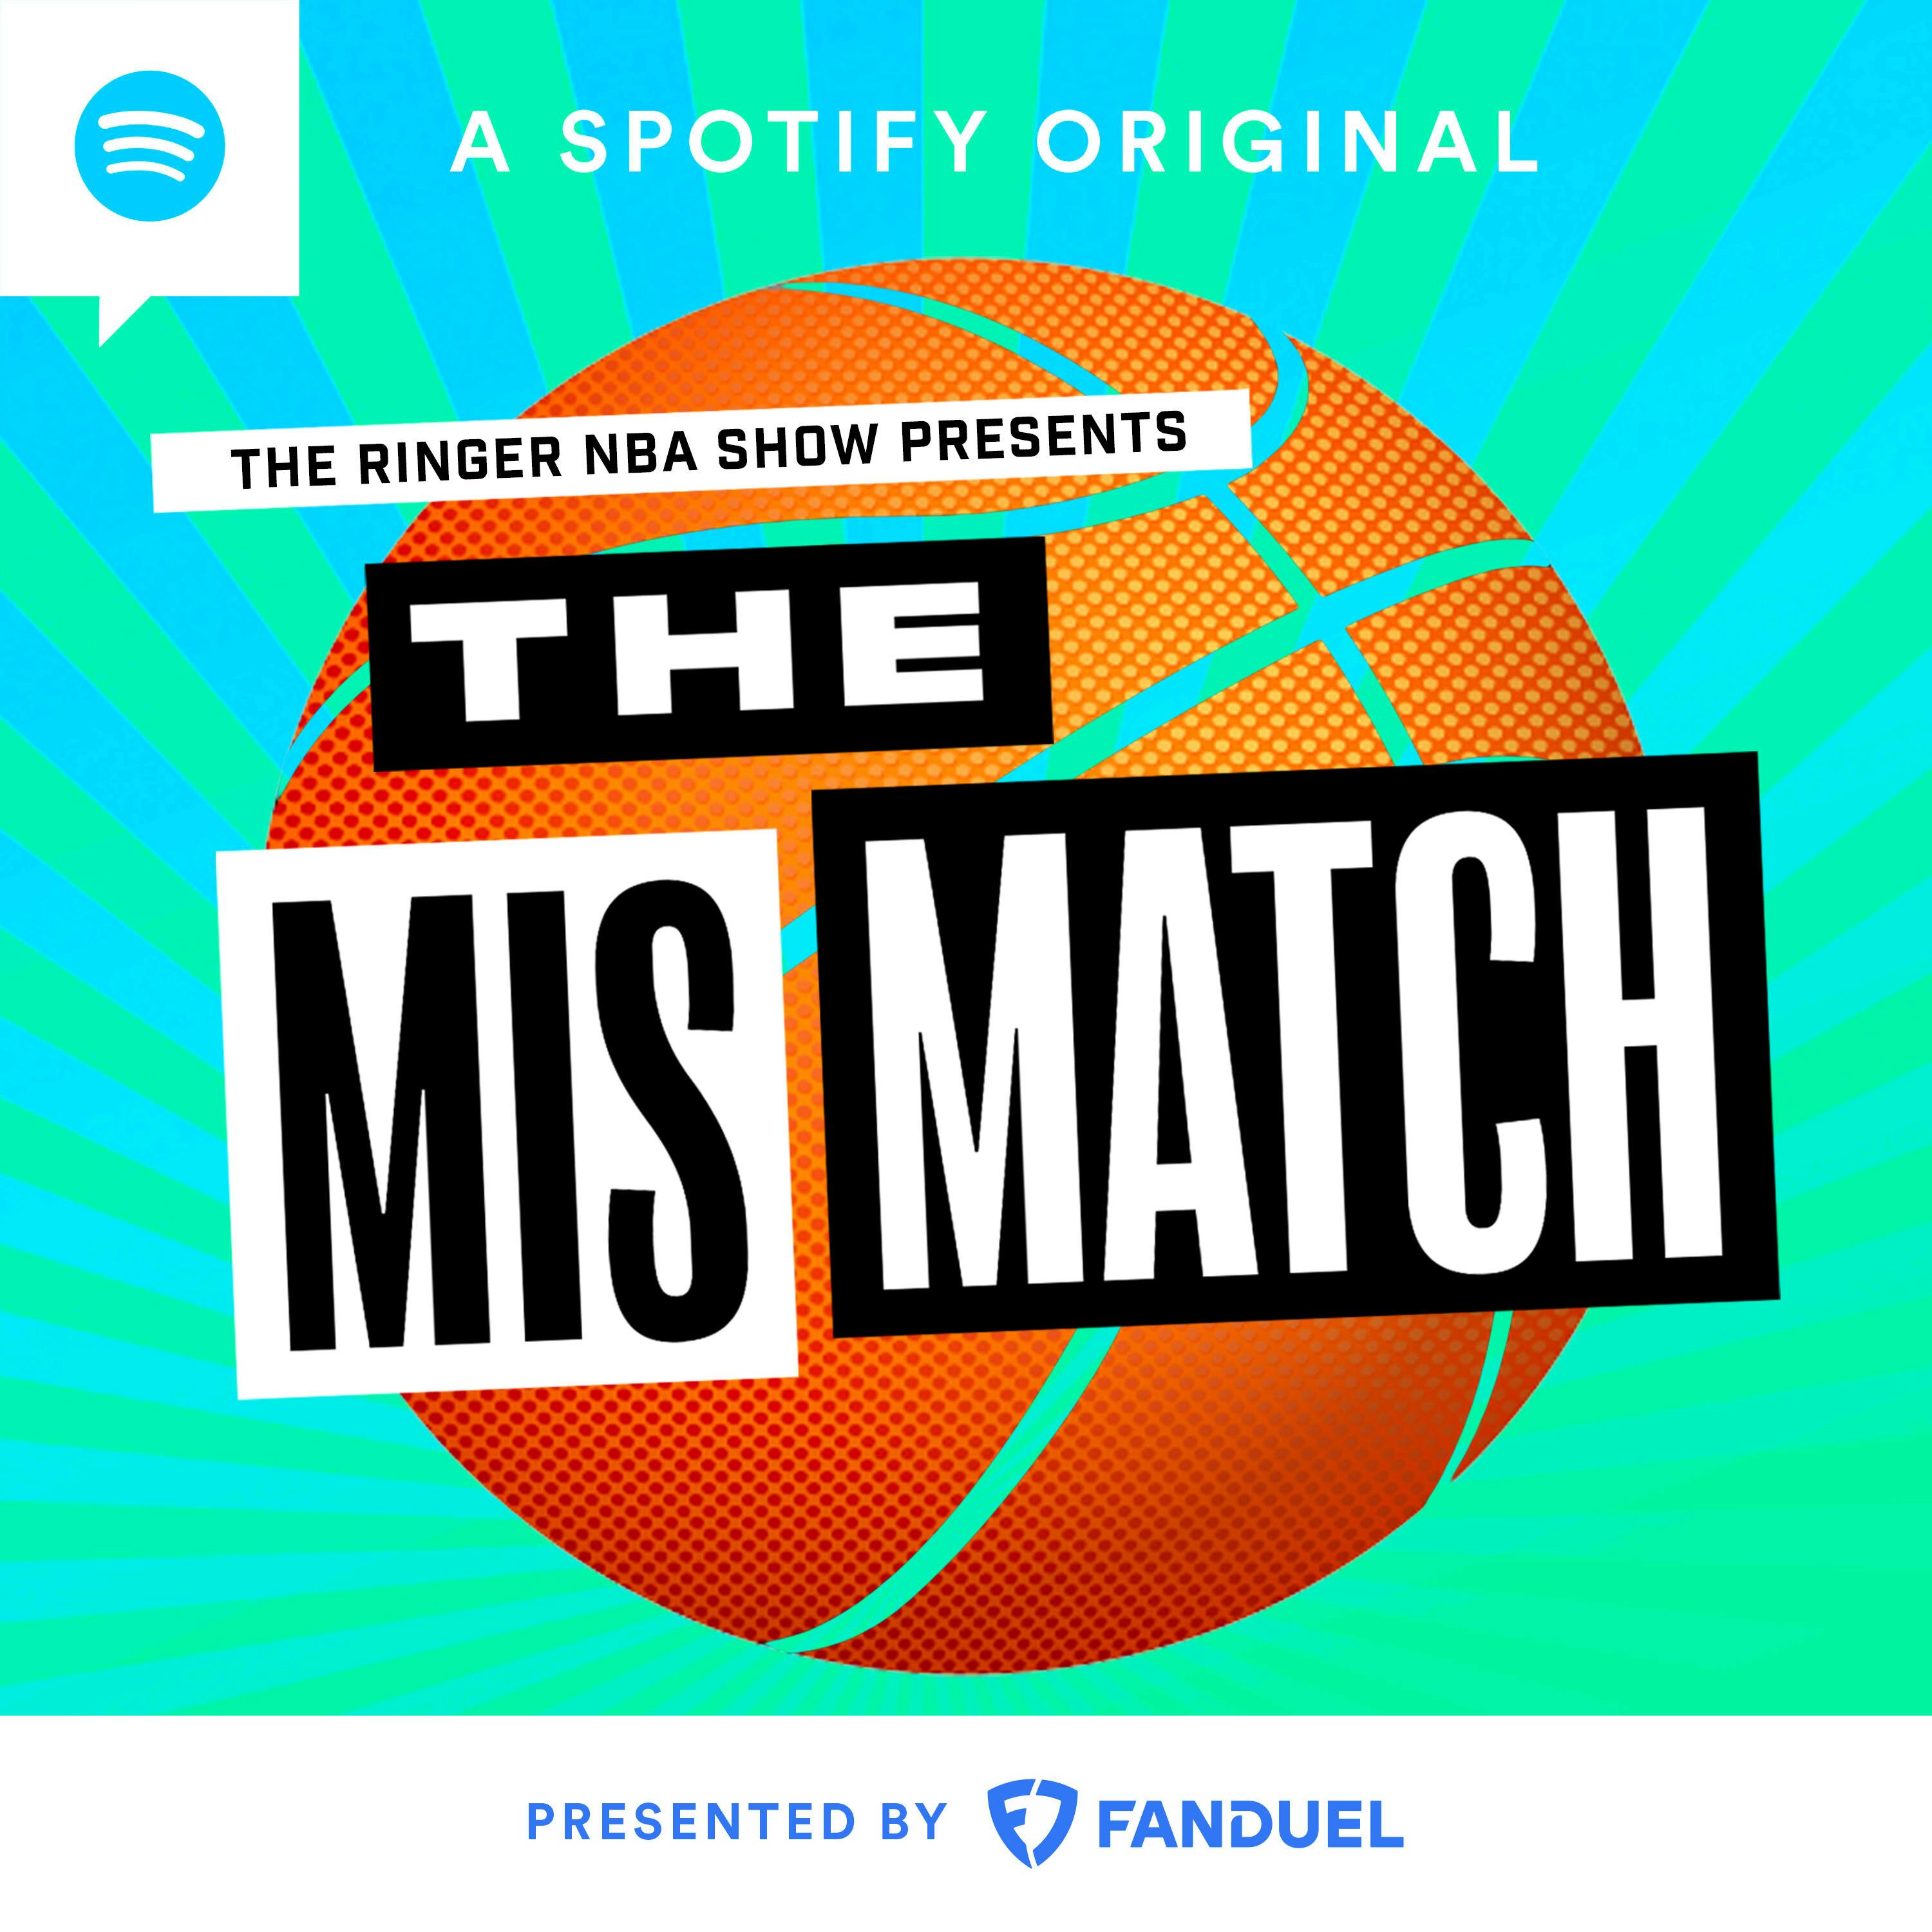 The Mismatch podcast show image